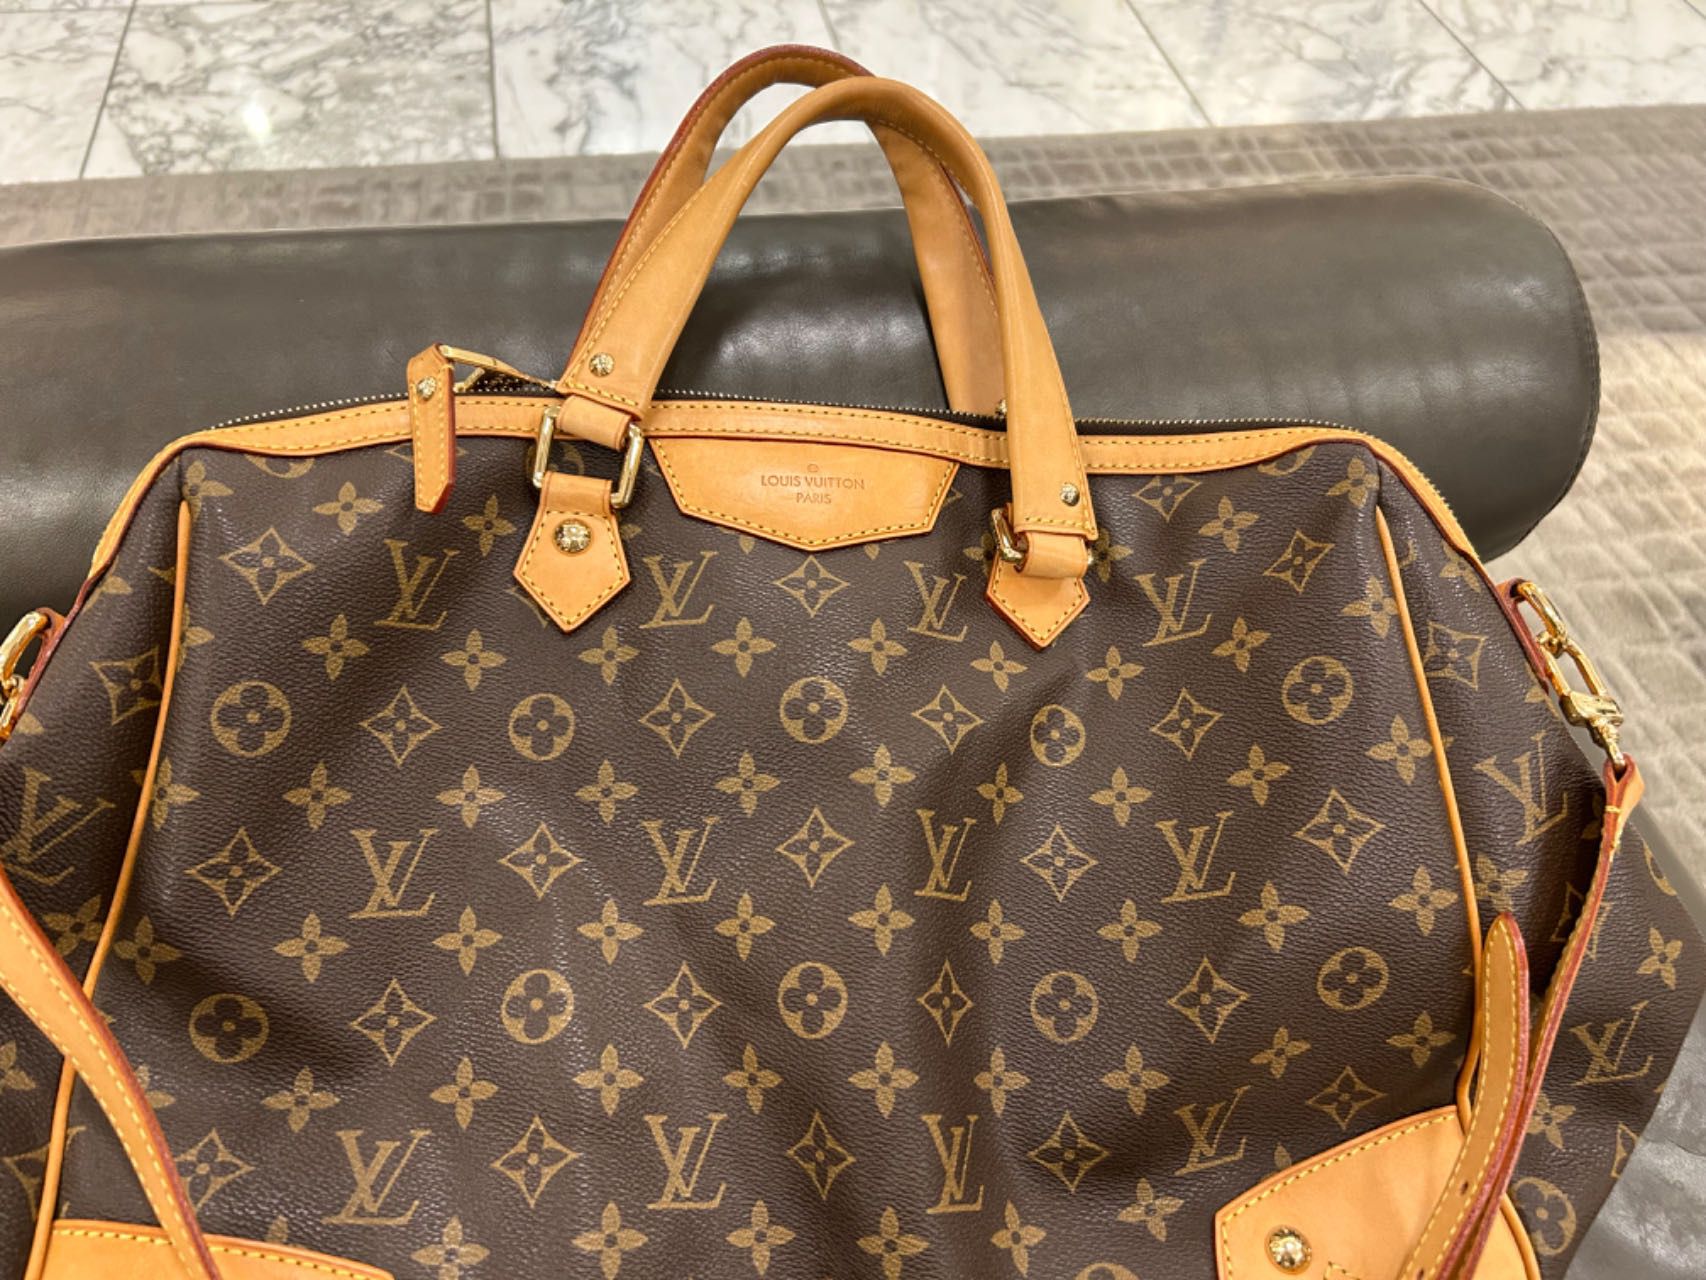 Louis Vuitton Classic Pattern Bag Big Size (Price $380)